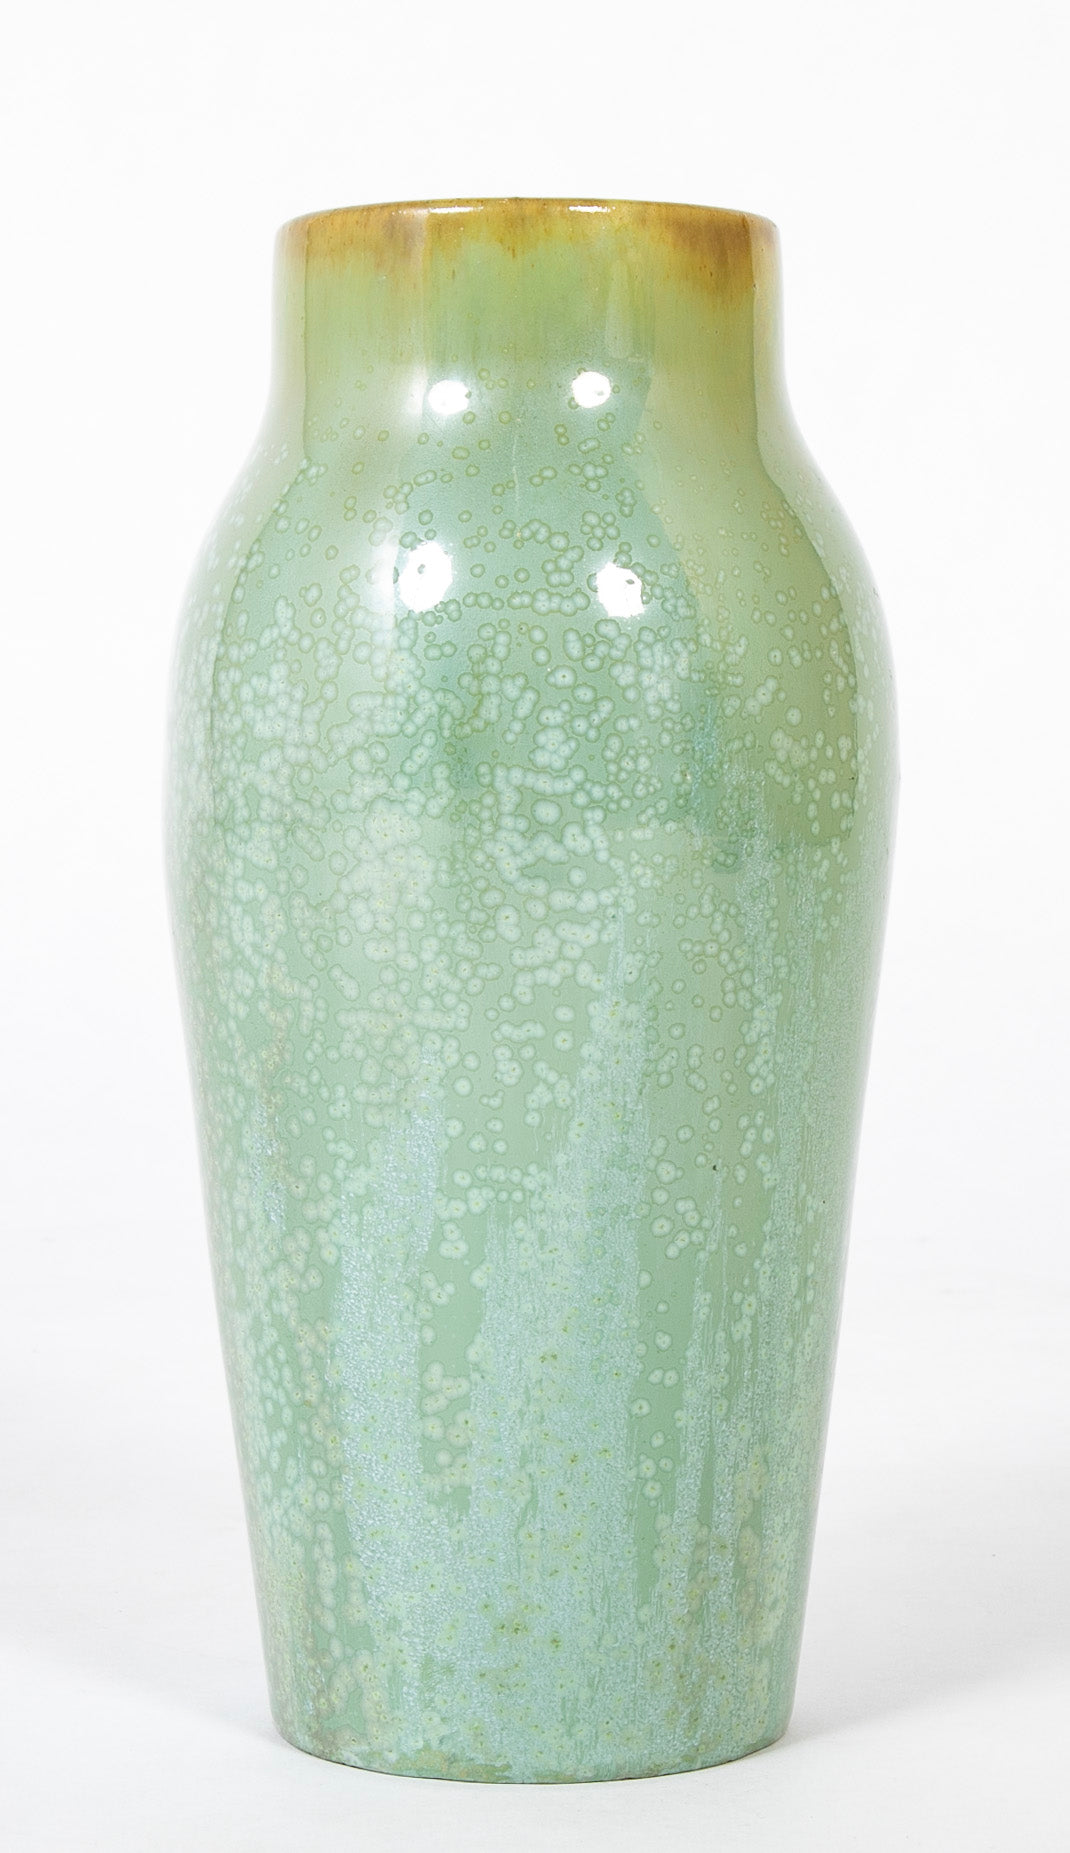 A Fulper Pottery Vase with Cucumber Glaze